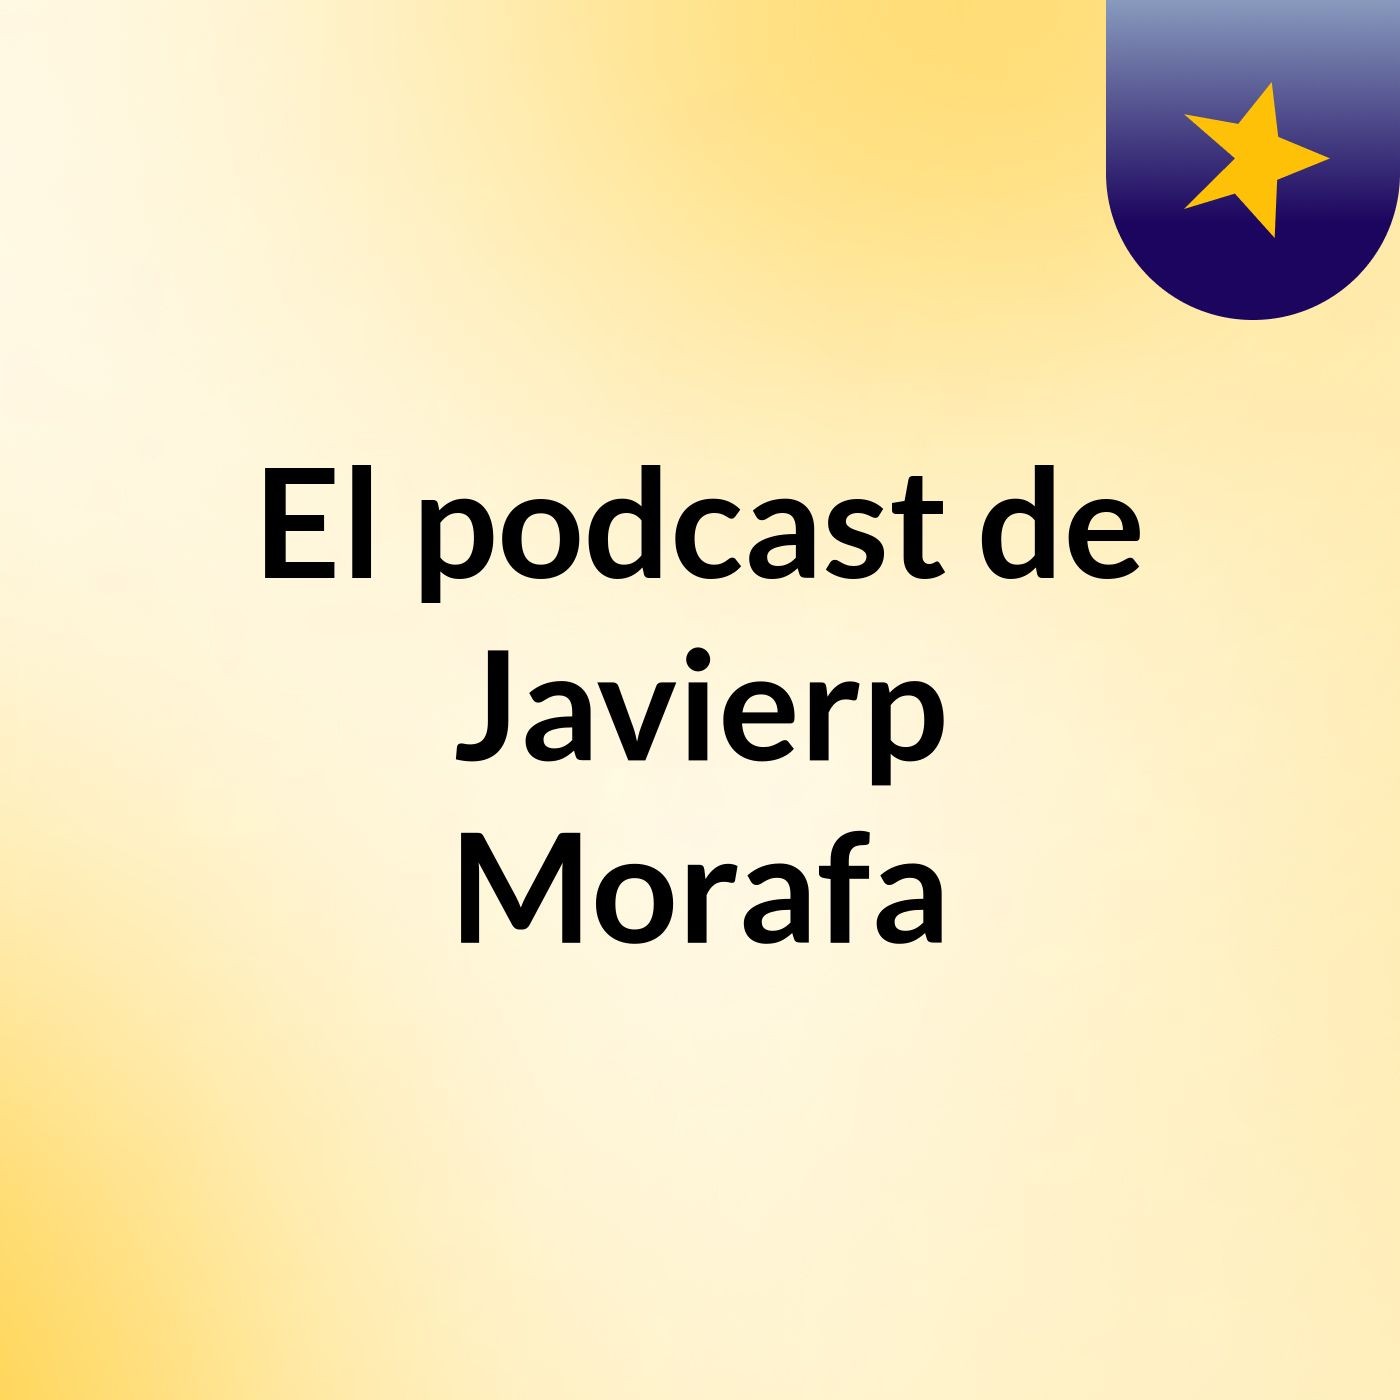 Episodio 3 - El podcast de Javierp Morafa